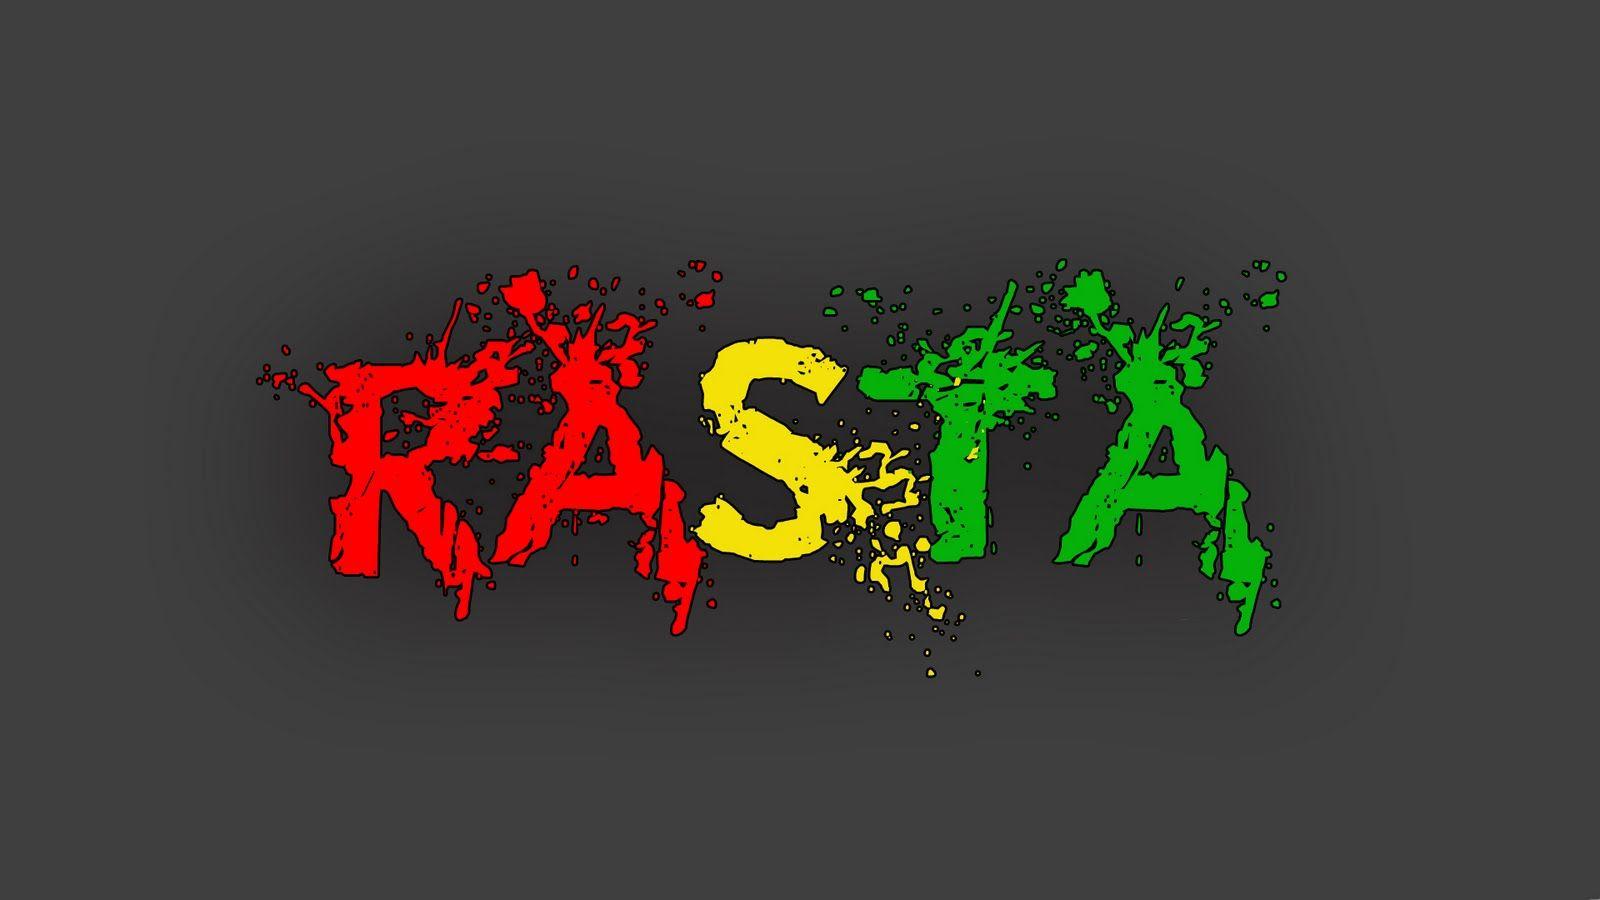 Rasta Wallpaper, desktop, phone, tablet, mobile, 2k, 4k: new rasta